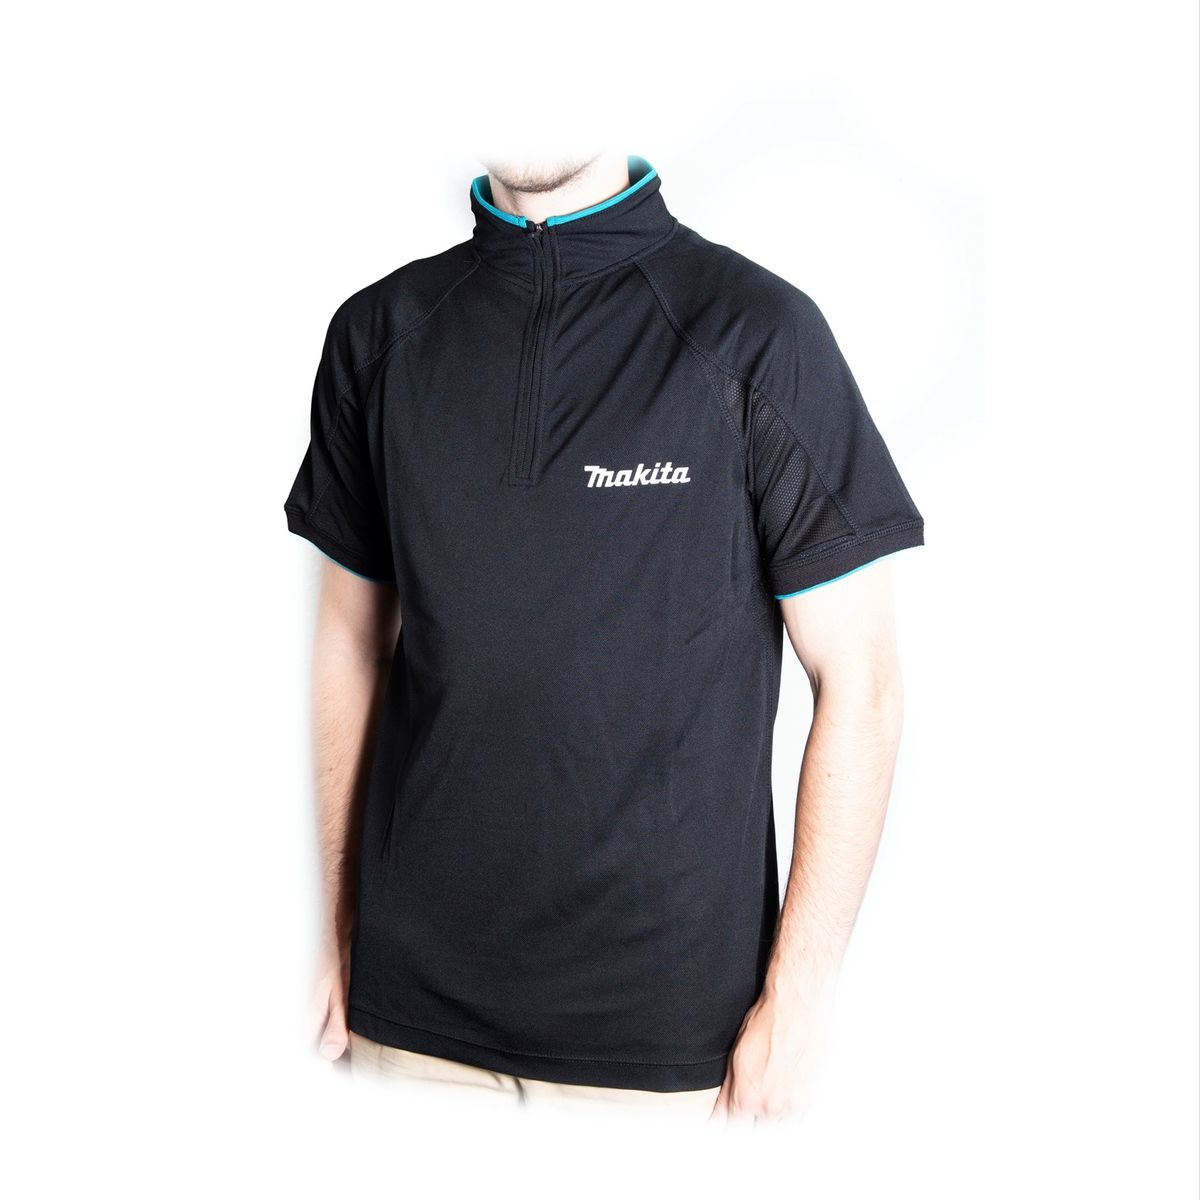 Makita Fahrrad Shirt T-Shirt Größe L 100% Polyester ( 98P138-L ) Farbe schwarz - Toolbrothers